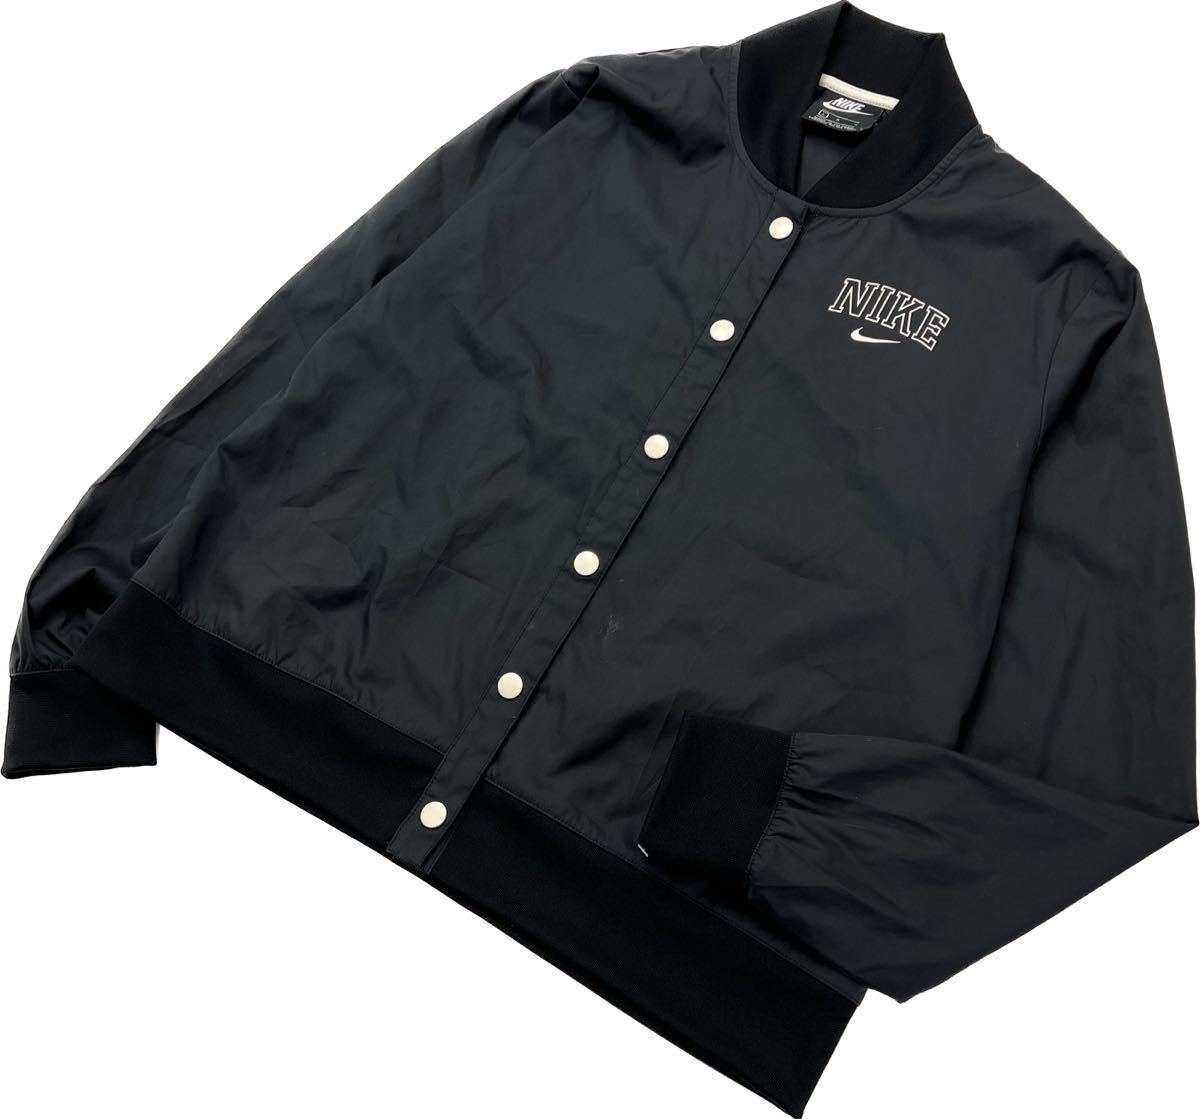 NIKE * Kids L 150-160 соответствует тонкий нейлон жакет куртка блузон черный спорт стиль Town Youth Nike #CB208